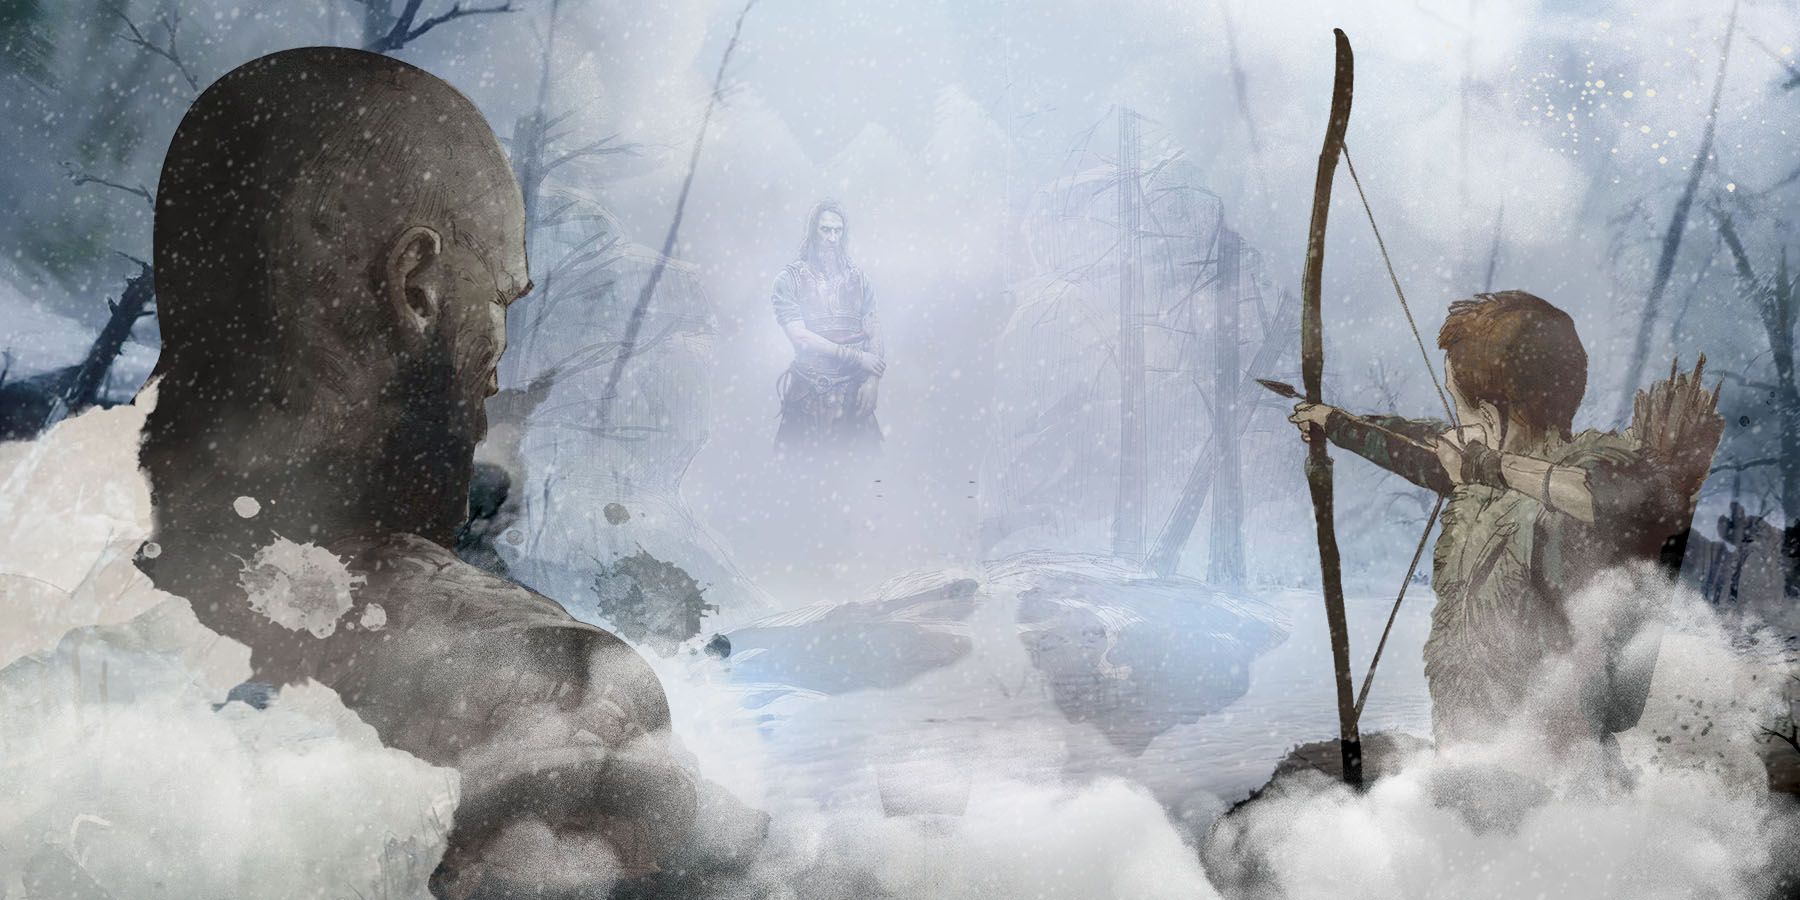 kratos and atreus figure in the fog